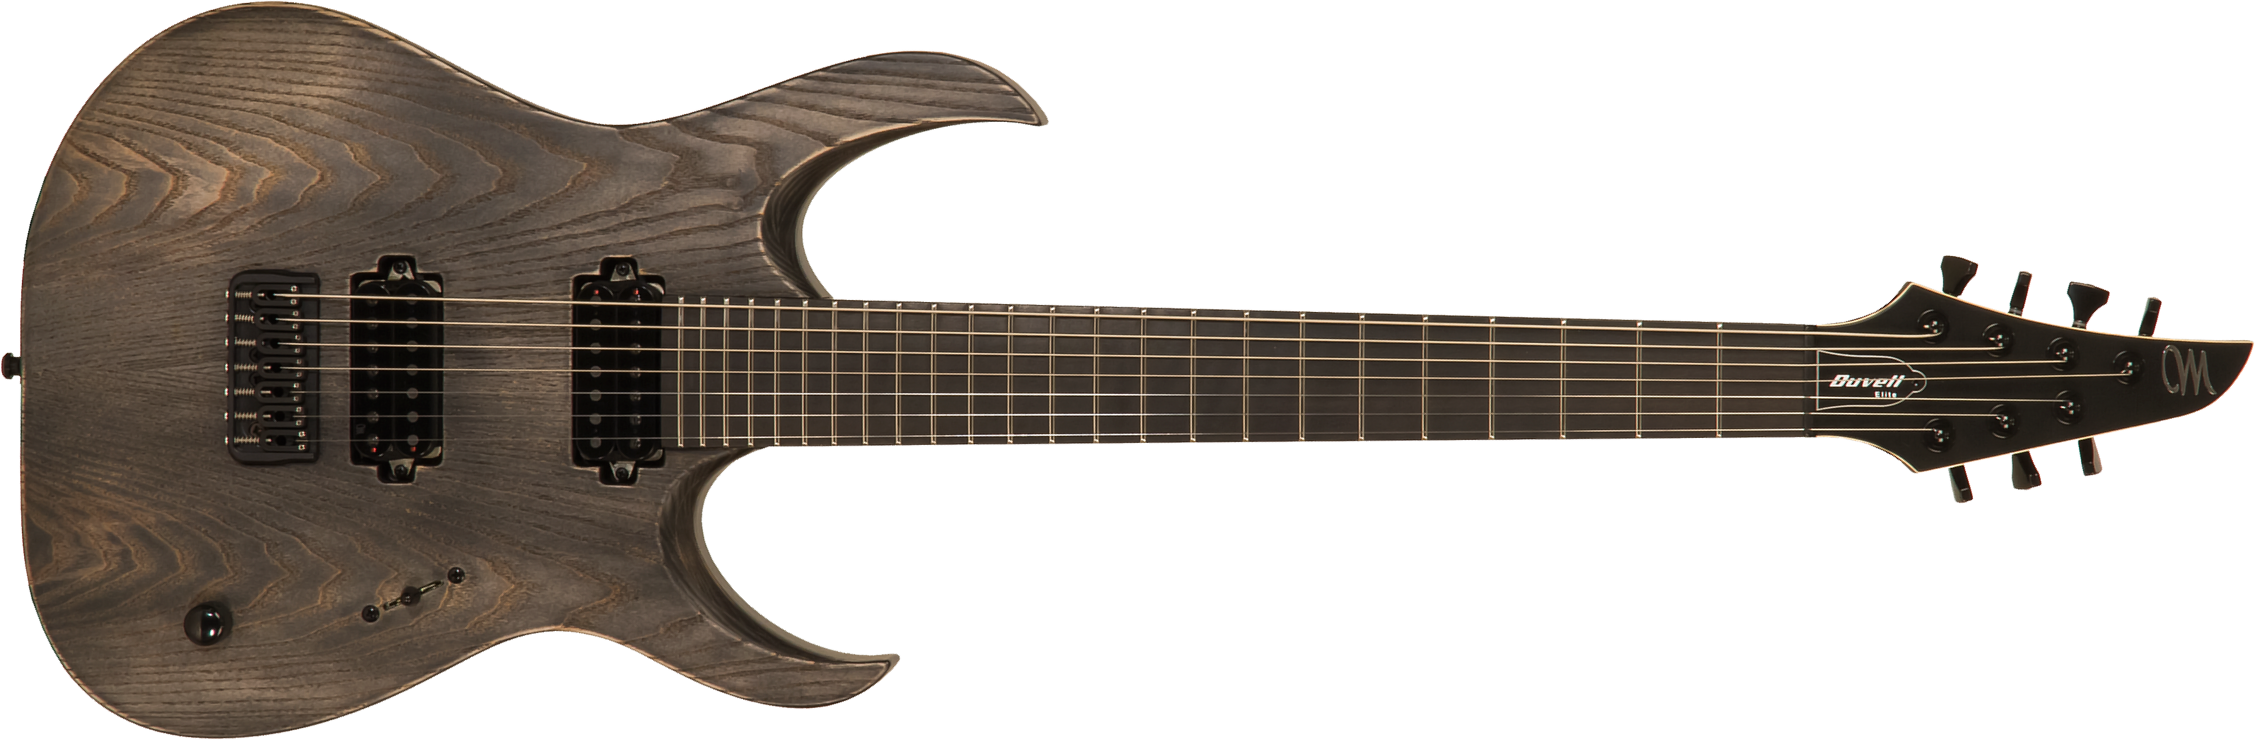 Mayones Guitars Duvell Elite Gothic 7 40th Anniversary 2h Tko Eb #df2205923 - Antique Black Satin - Guitarra eléctrica de 7 cuerdas - Main picture